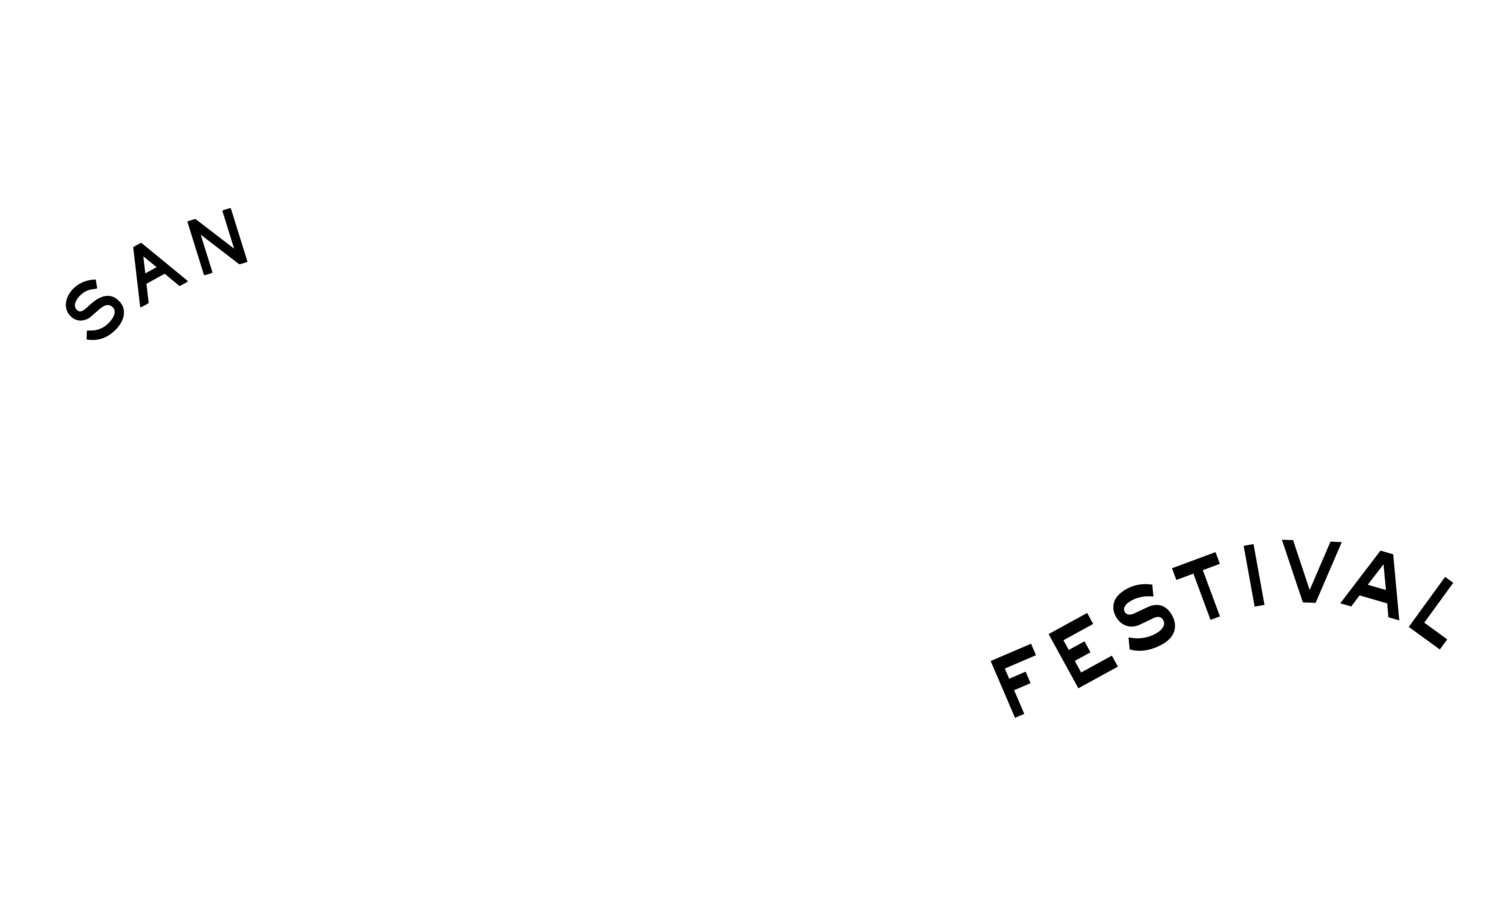 2019 San Francisco Coffee Festival